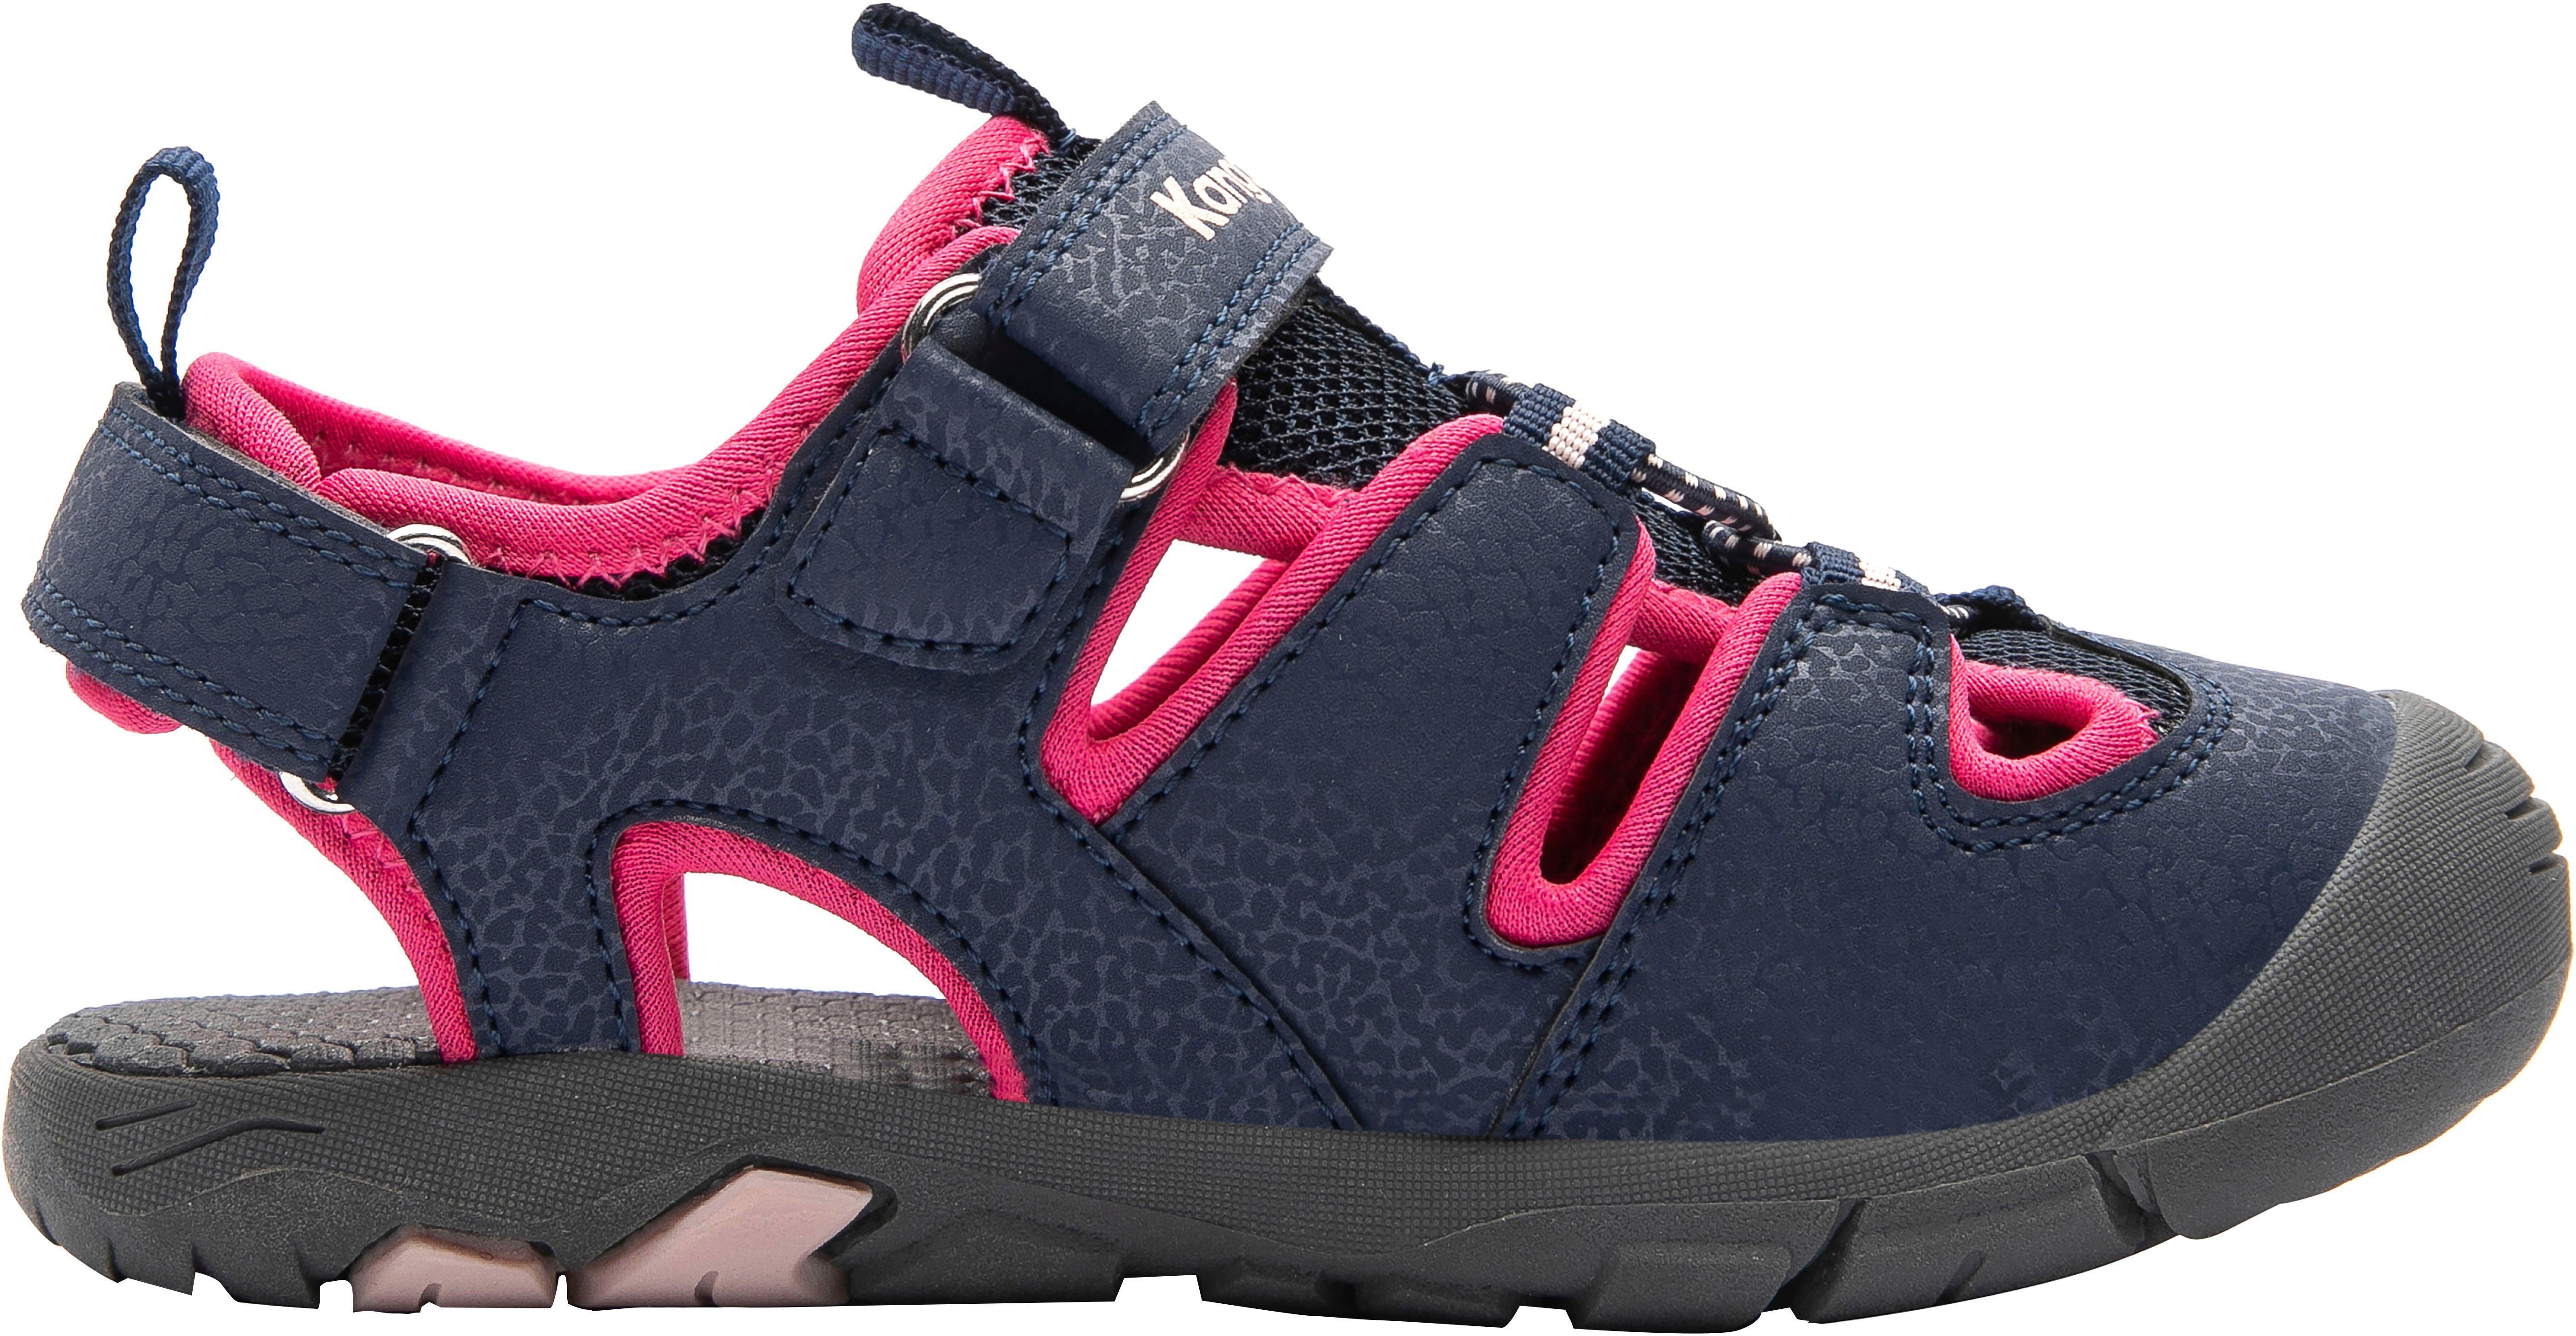 KangaROOS K-Trek Sandale mit Klettverschluss blau-pink